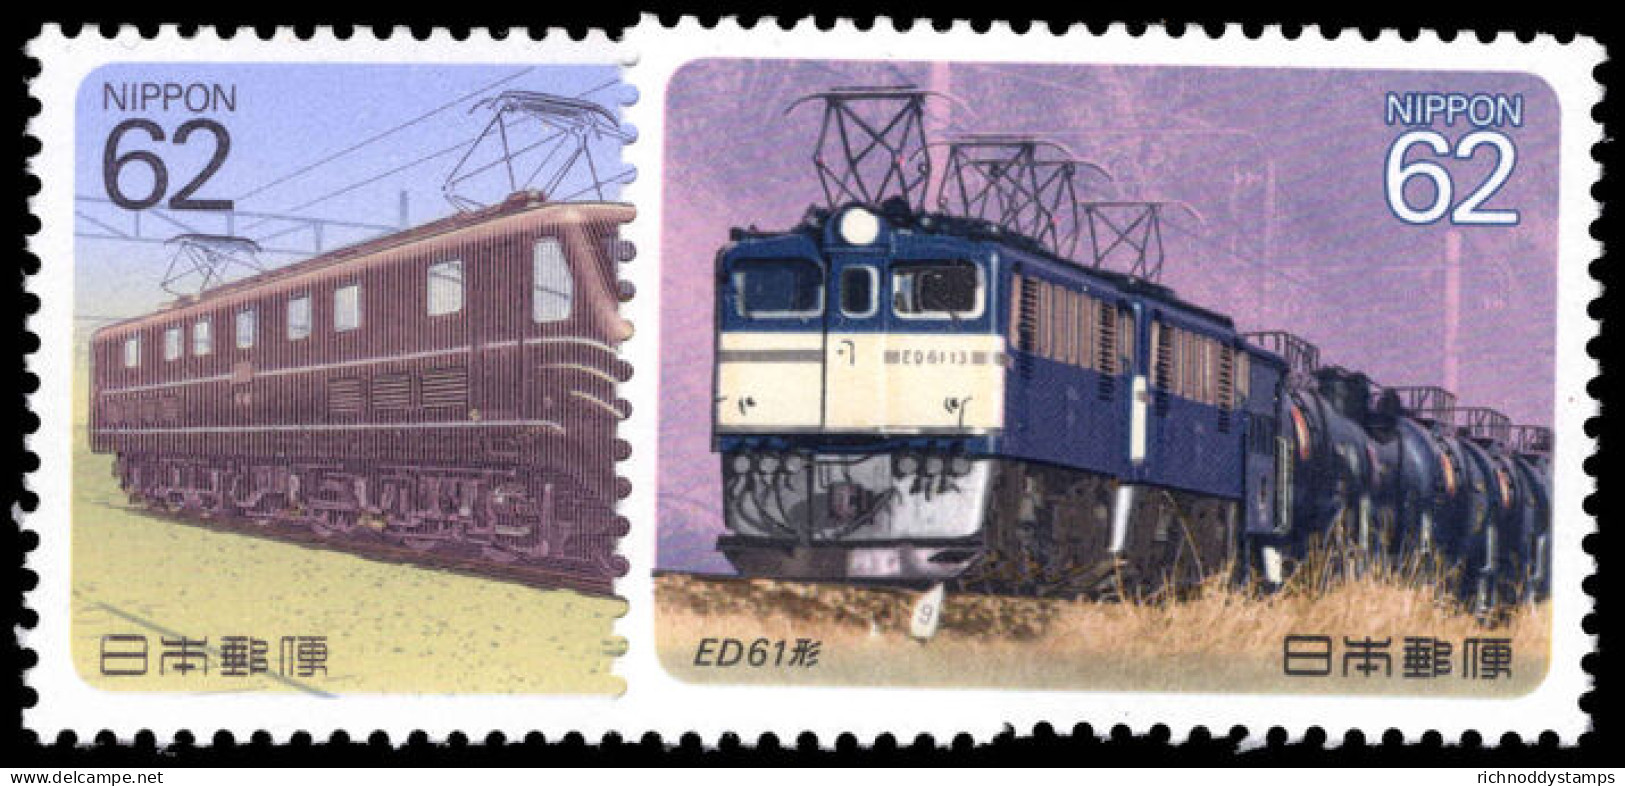 Japan 1990 Electric Railway Locomotives (4th Series) Unmounted Mint. - Neufs